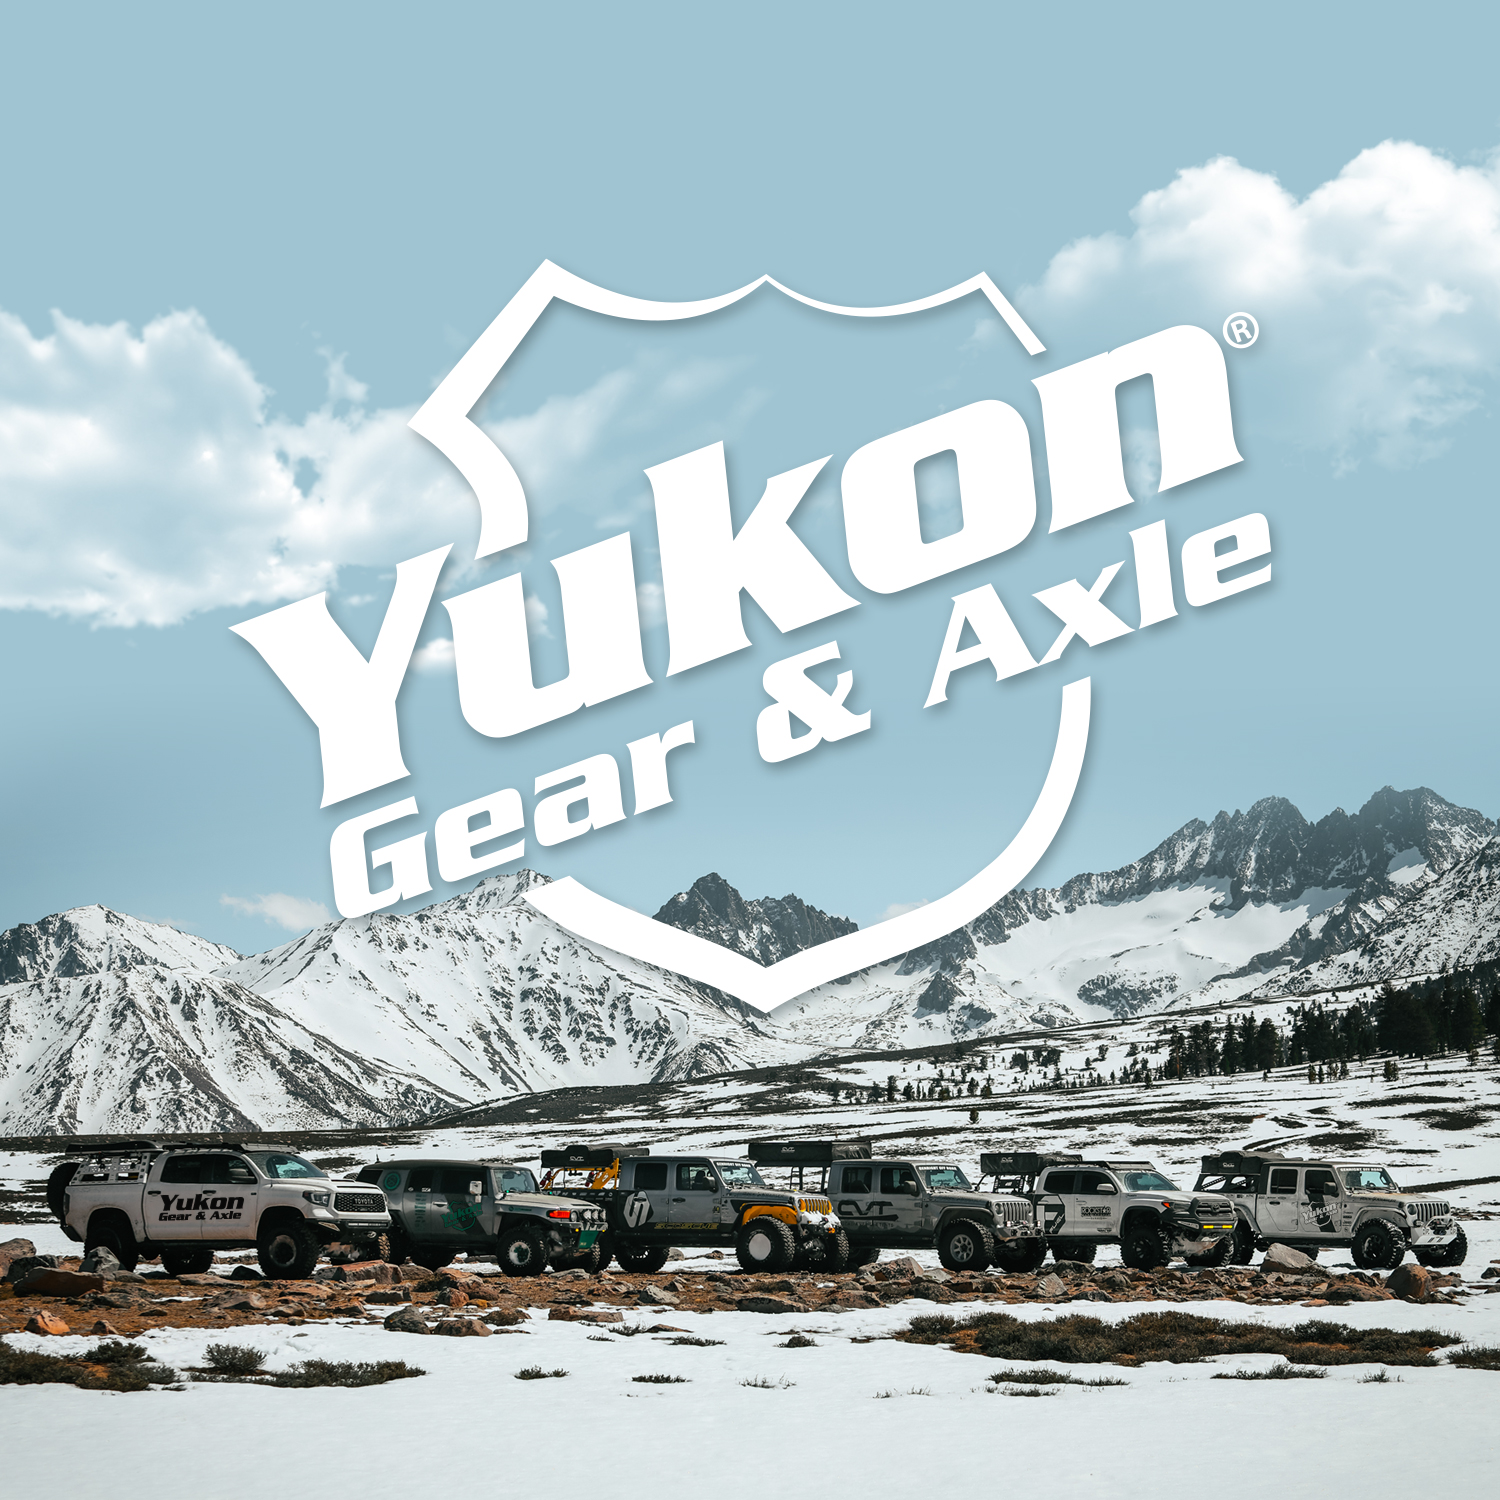 Yukon high performance replacement ring & pinion gear set, Dana 44, 4.11 ratio 